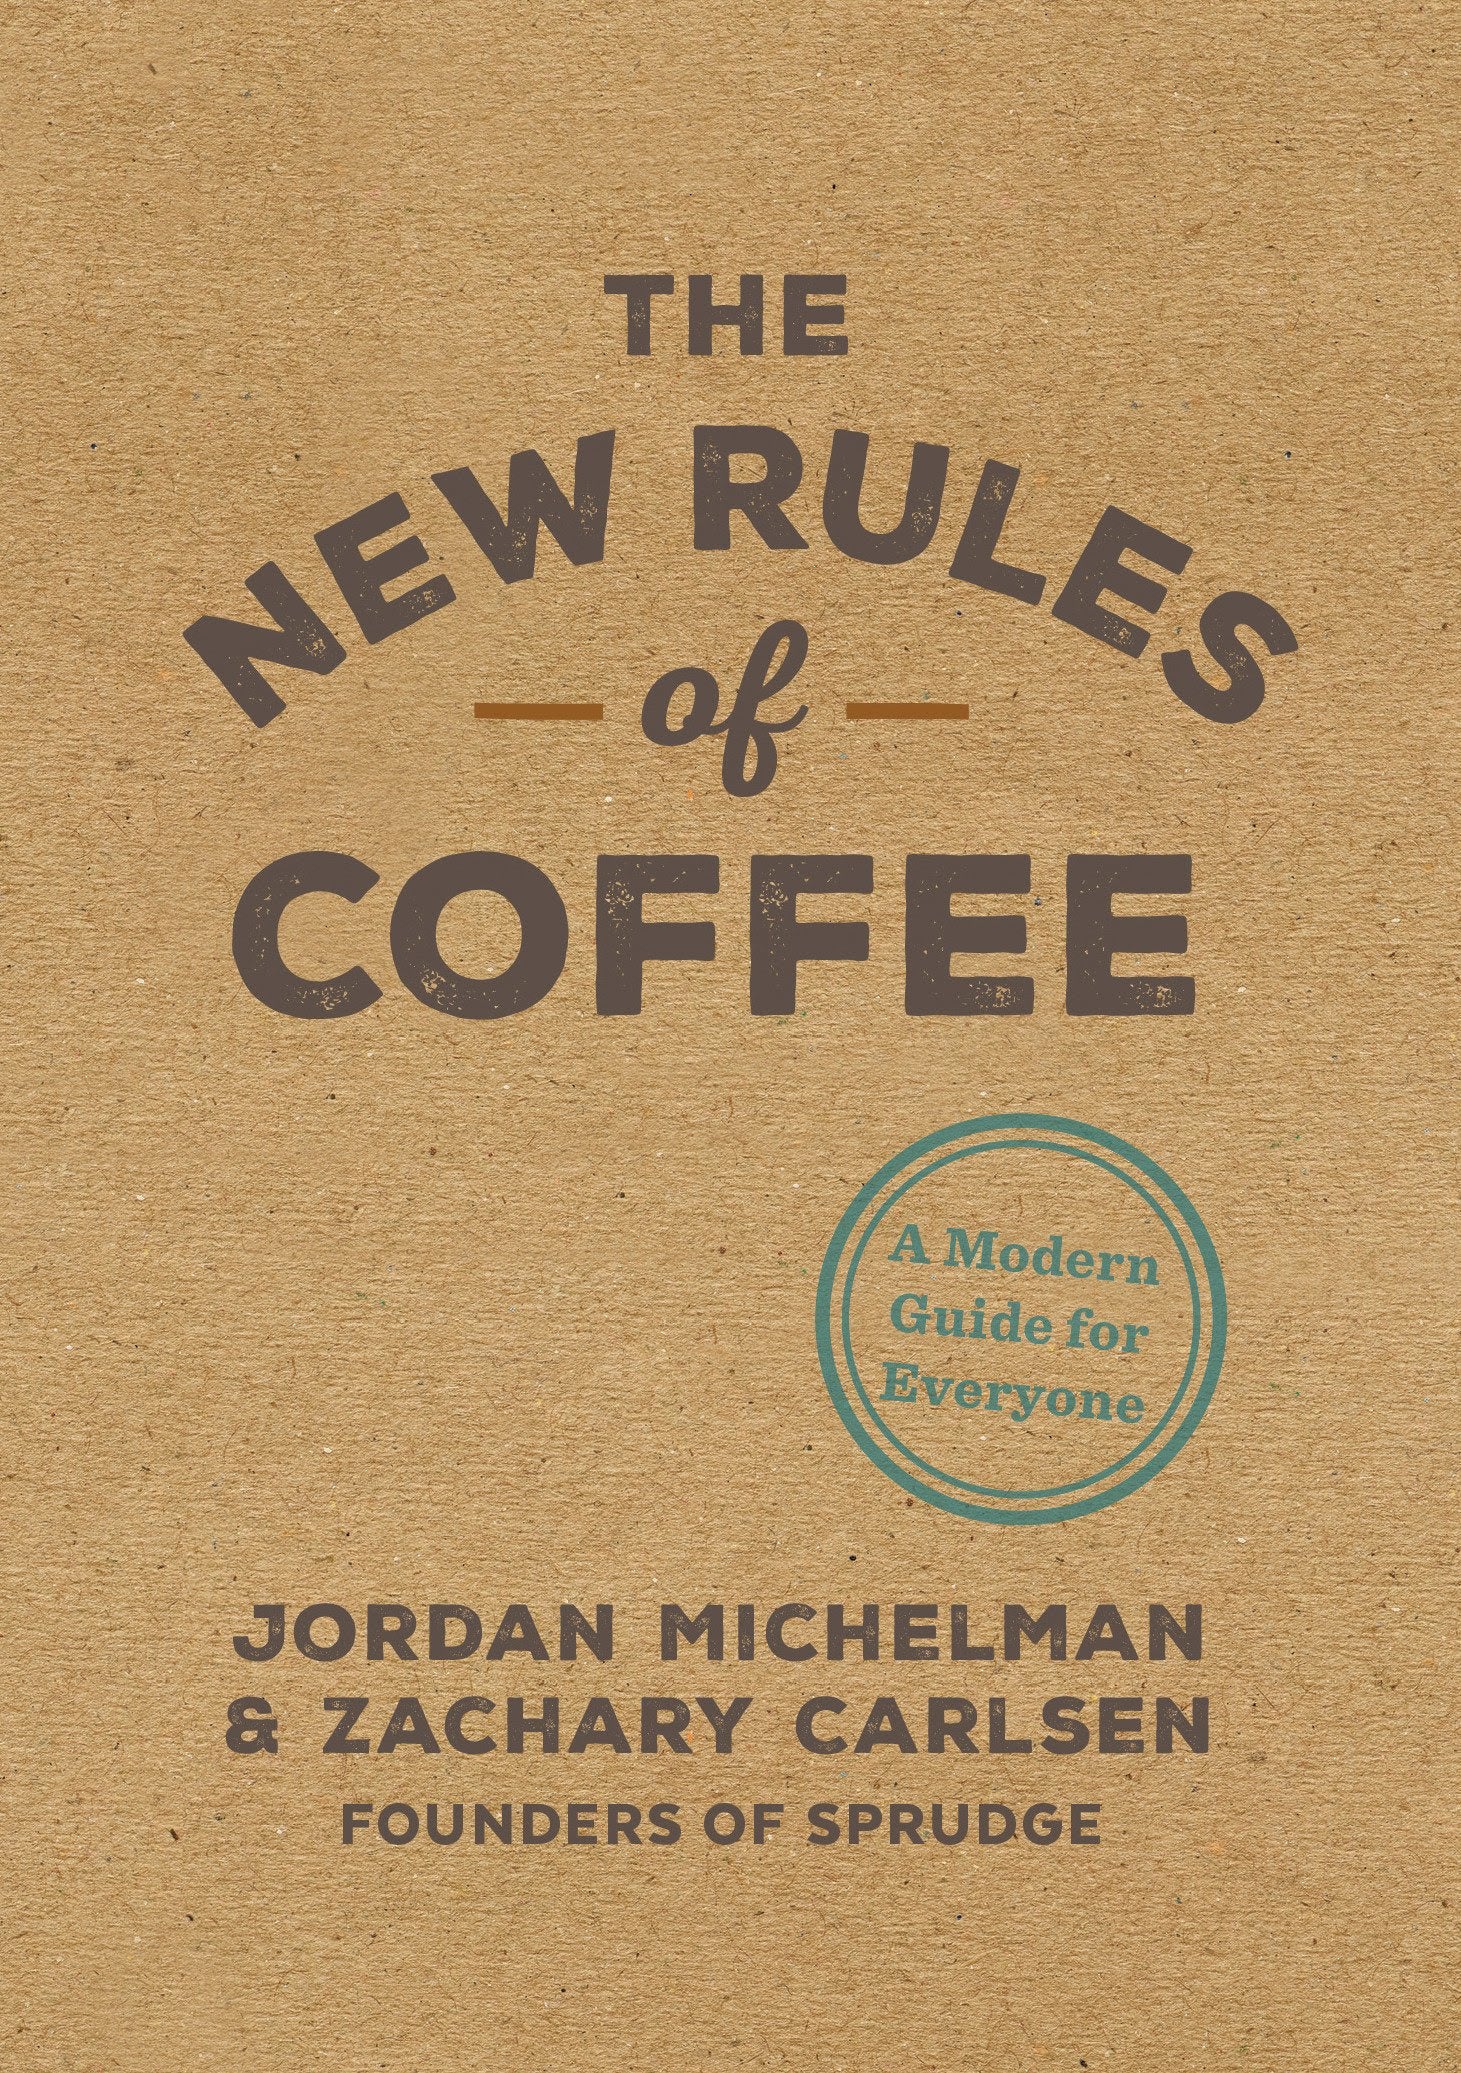 The New Rules of Coffee (Jordan Michelman, Zachary Carlsen)